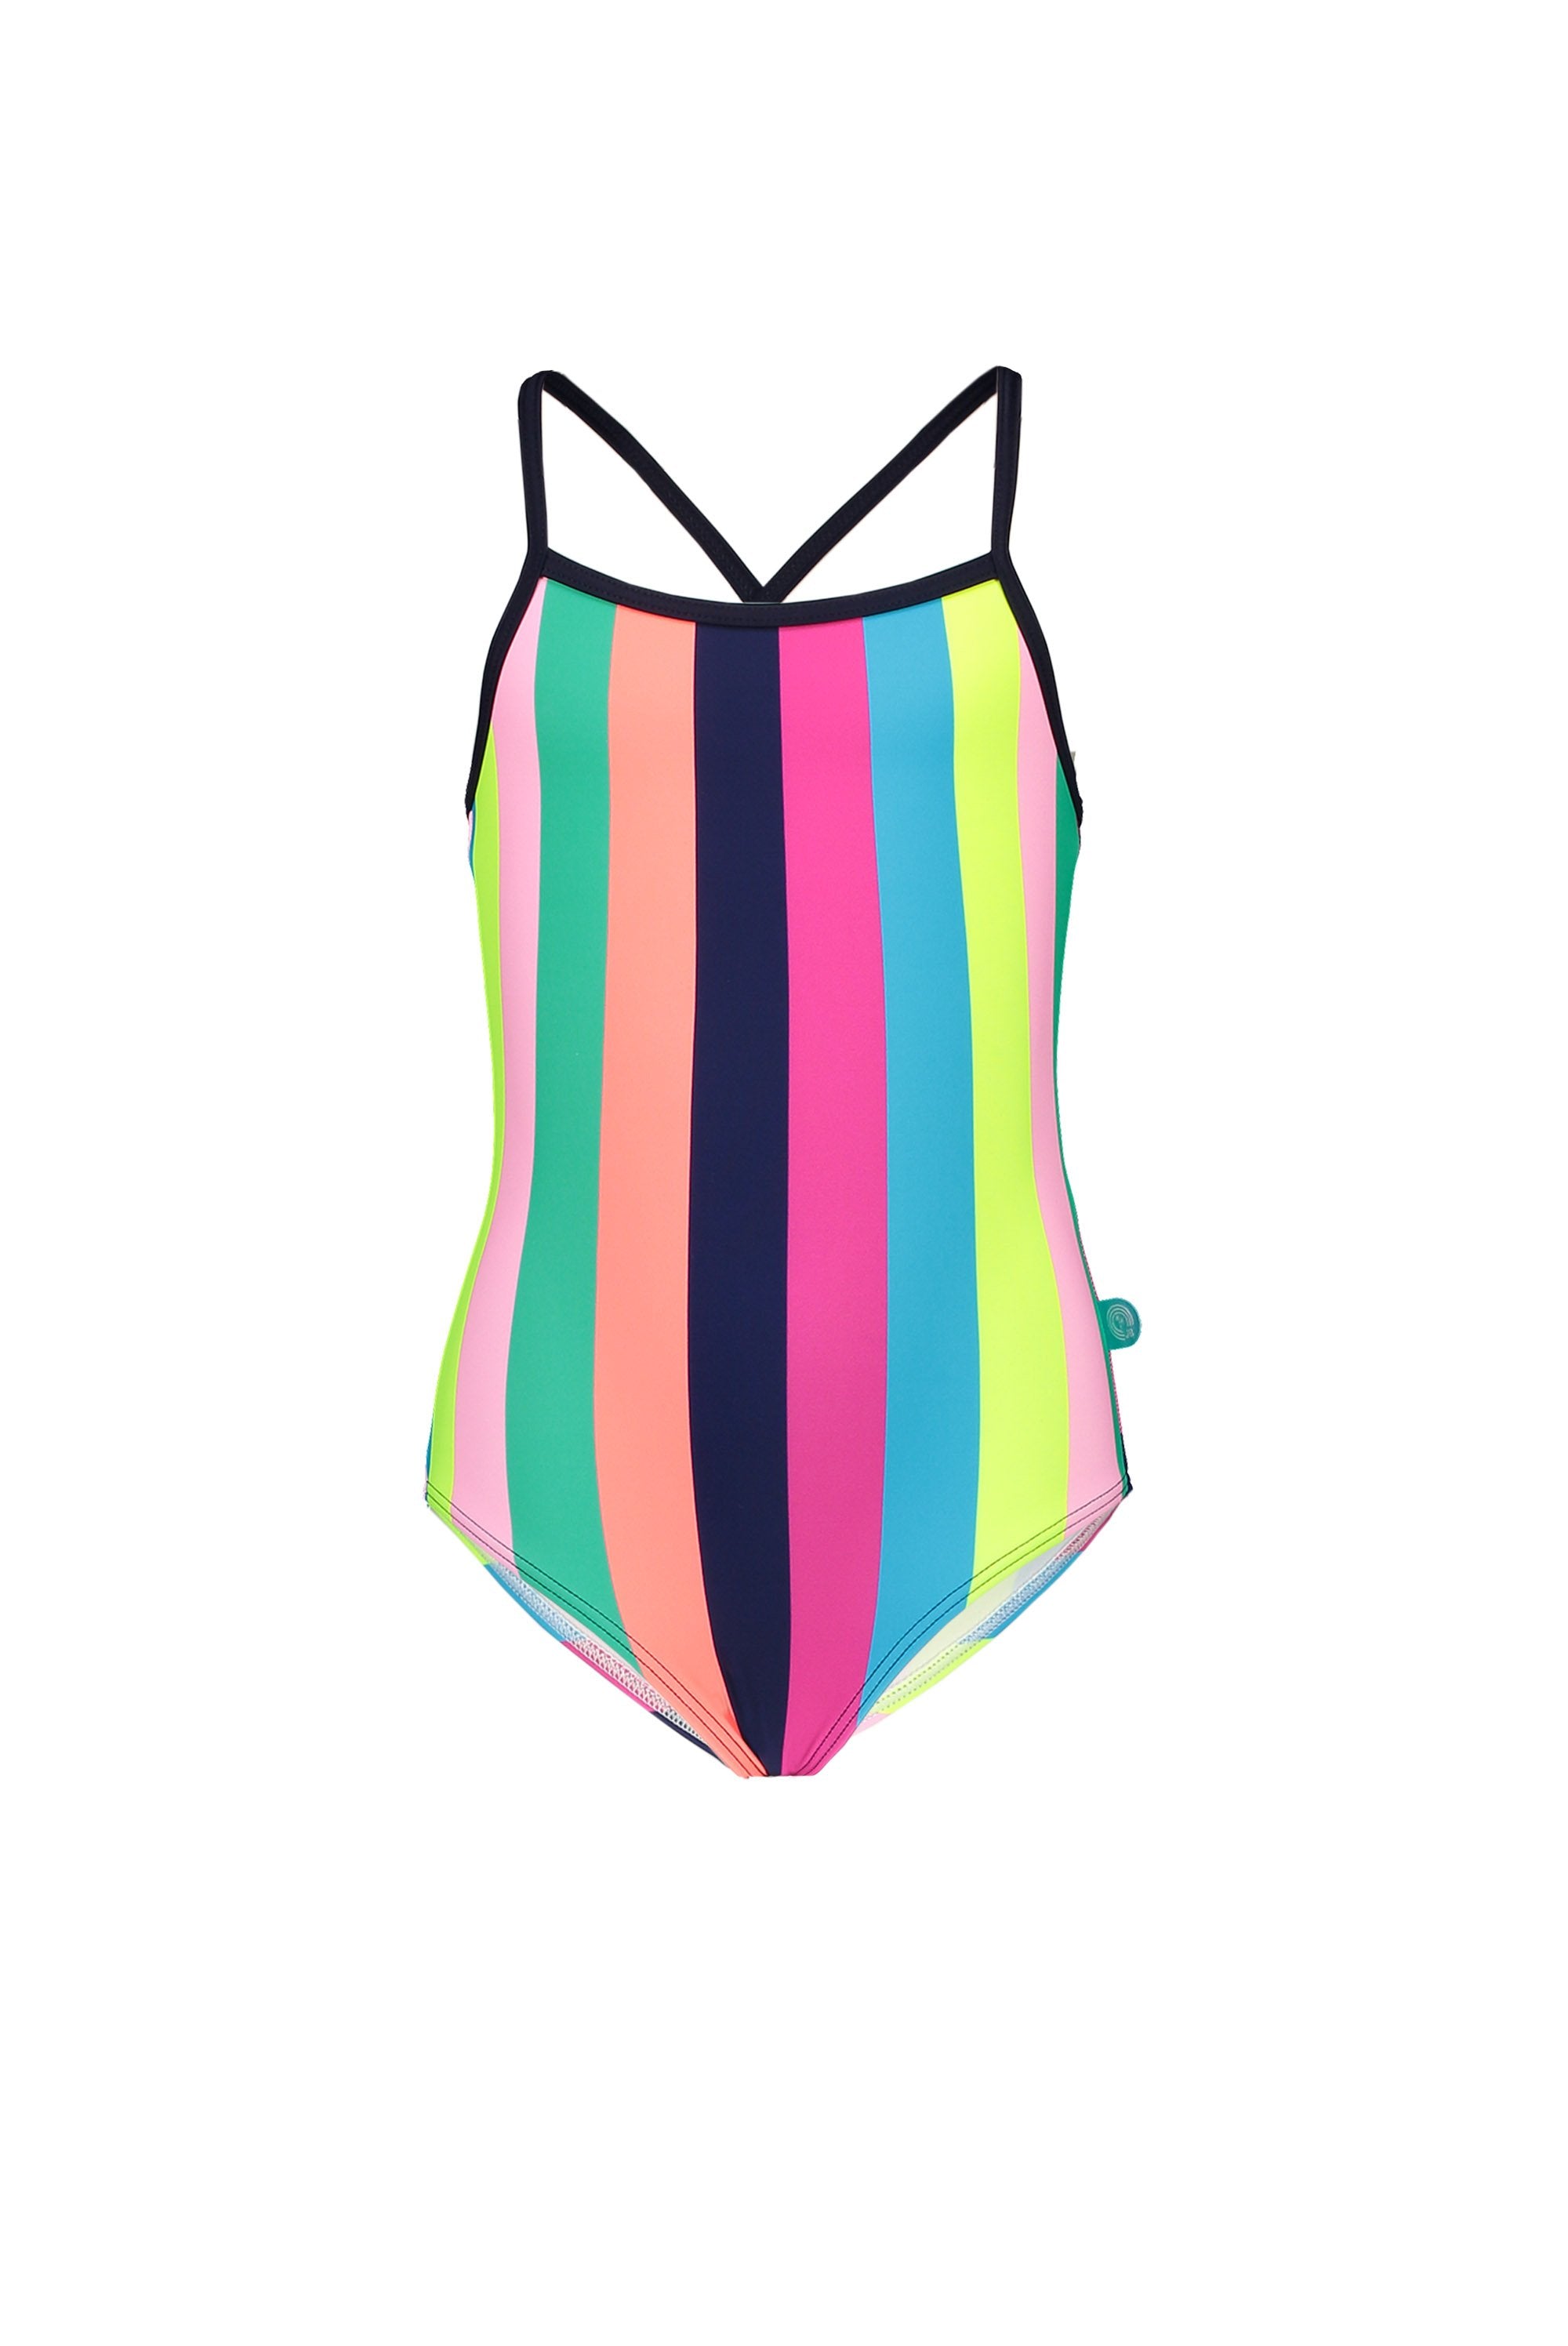 Meisjes Girls tropical stripes ao swimsuit van Just Beach in de kleur Tropical stripes in maat 140.